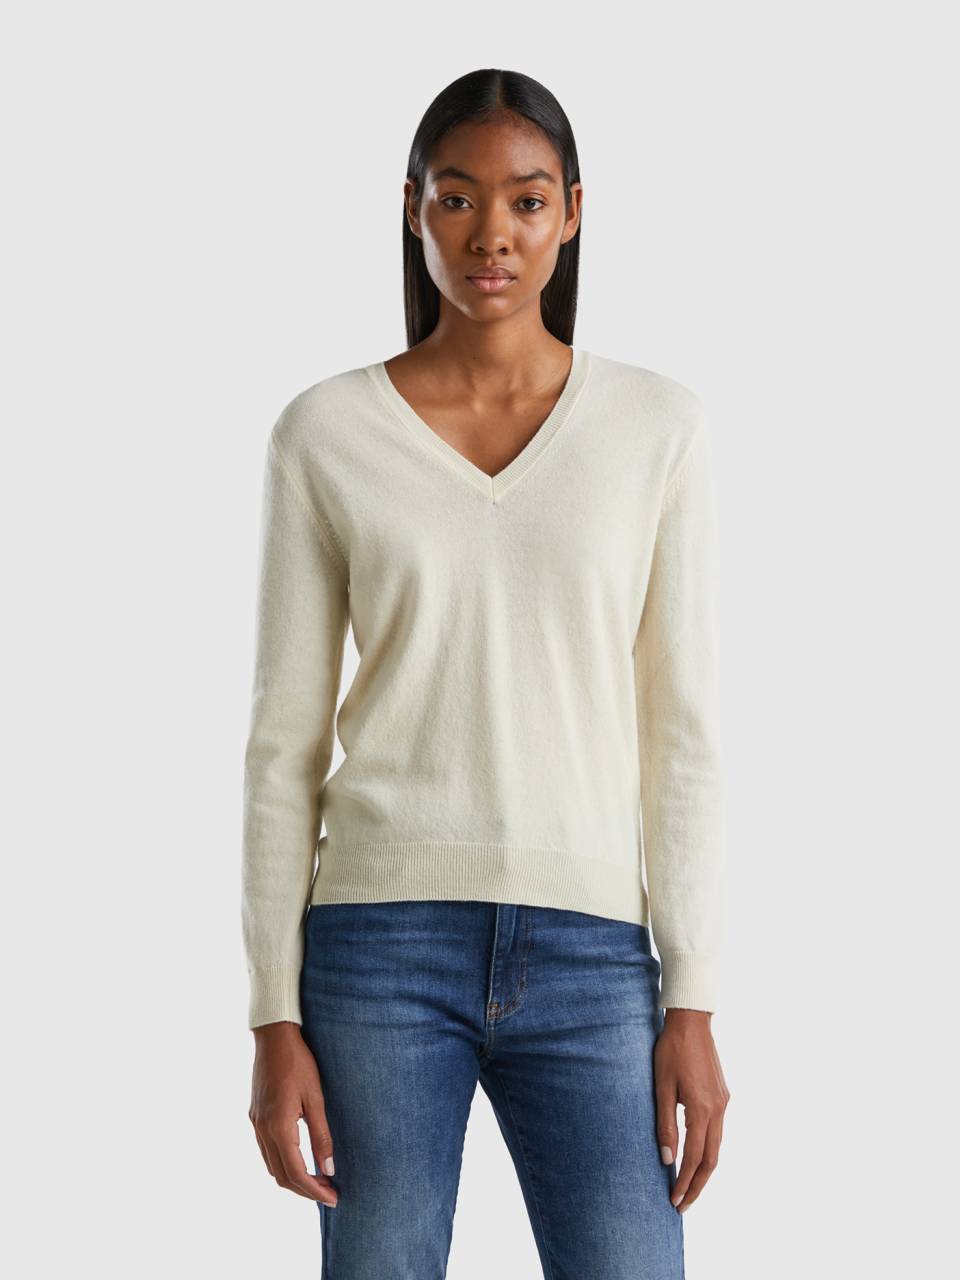 | Creamy Cream sweater White V-neck - in Benetton wool Merino pure